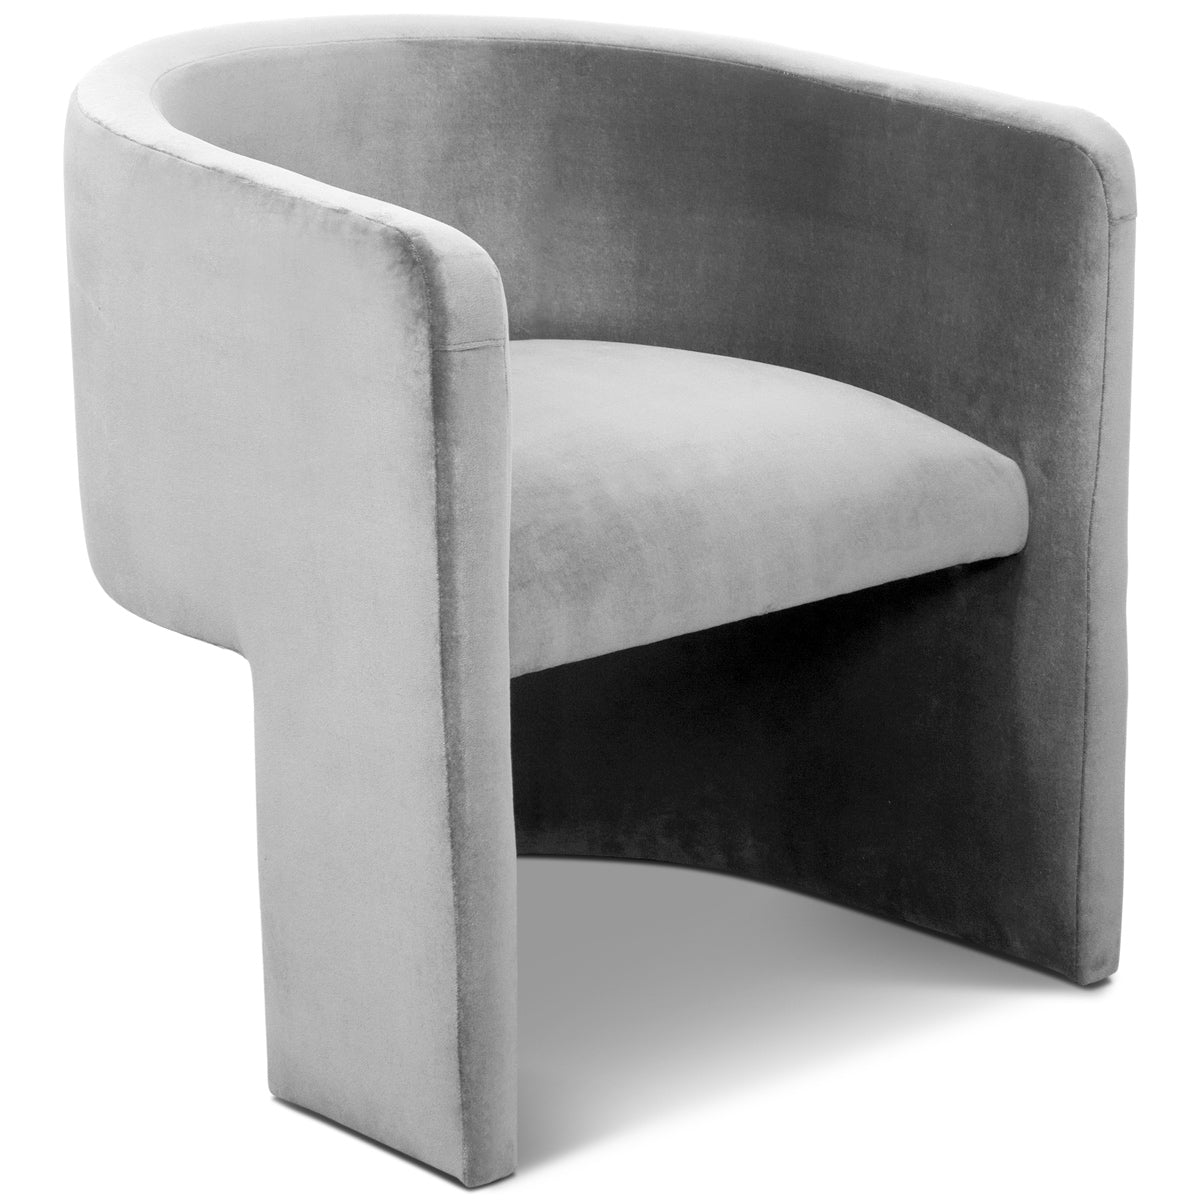 Martinique Chair in Velvet - ModShop1.com